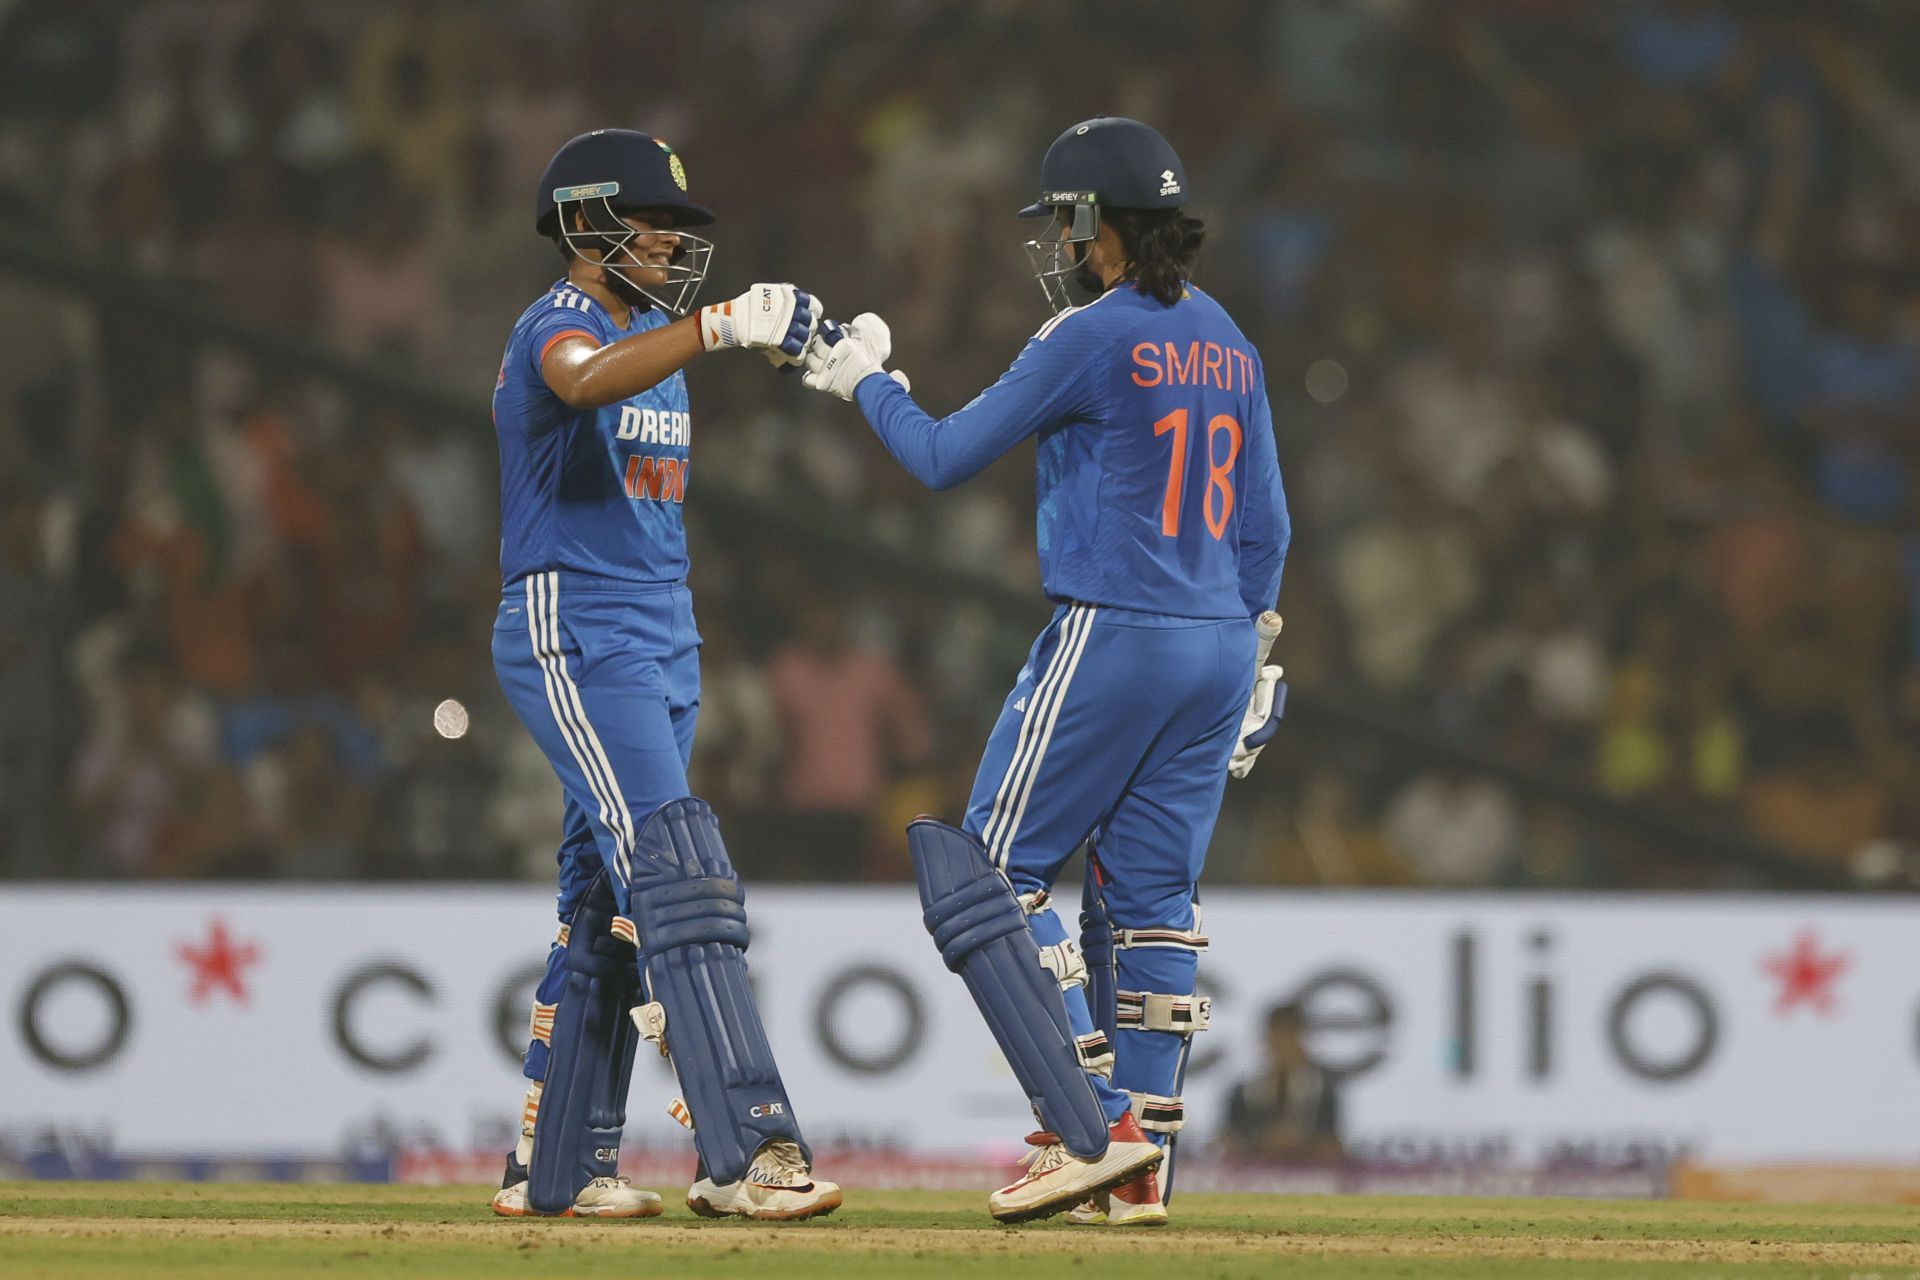 Smriti Mandhana (right) and Shafali Verma smashed 59 runs in the powerplay overs. [P/C: Getty]